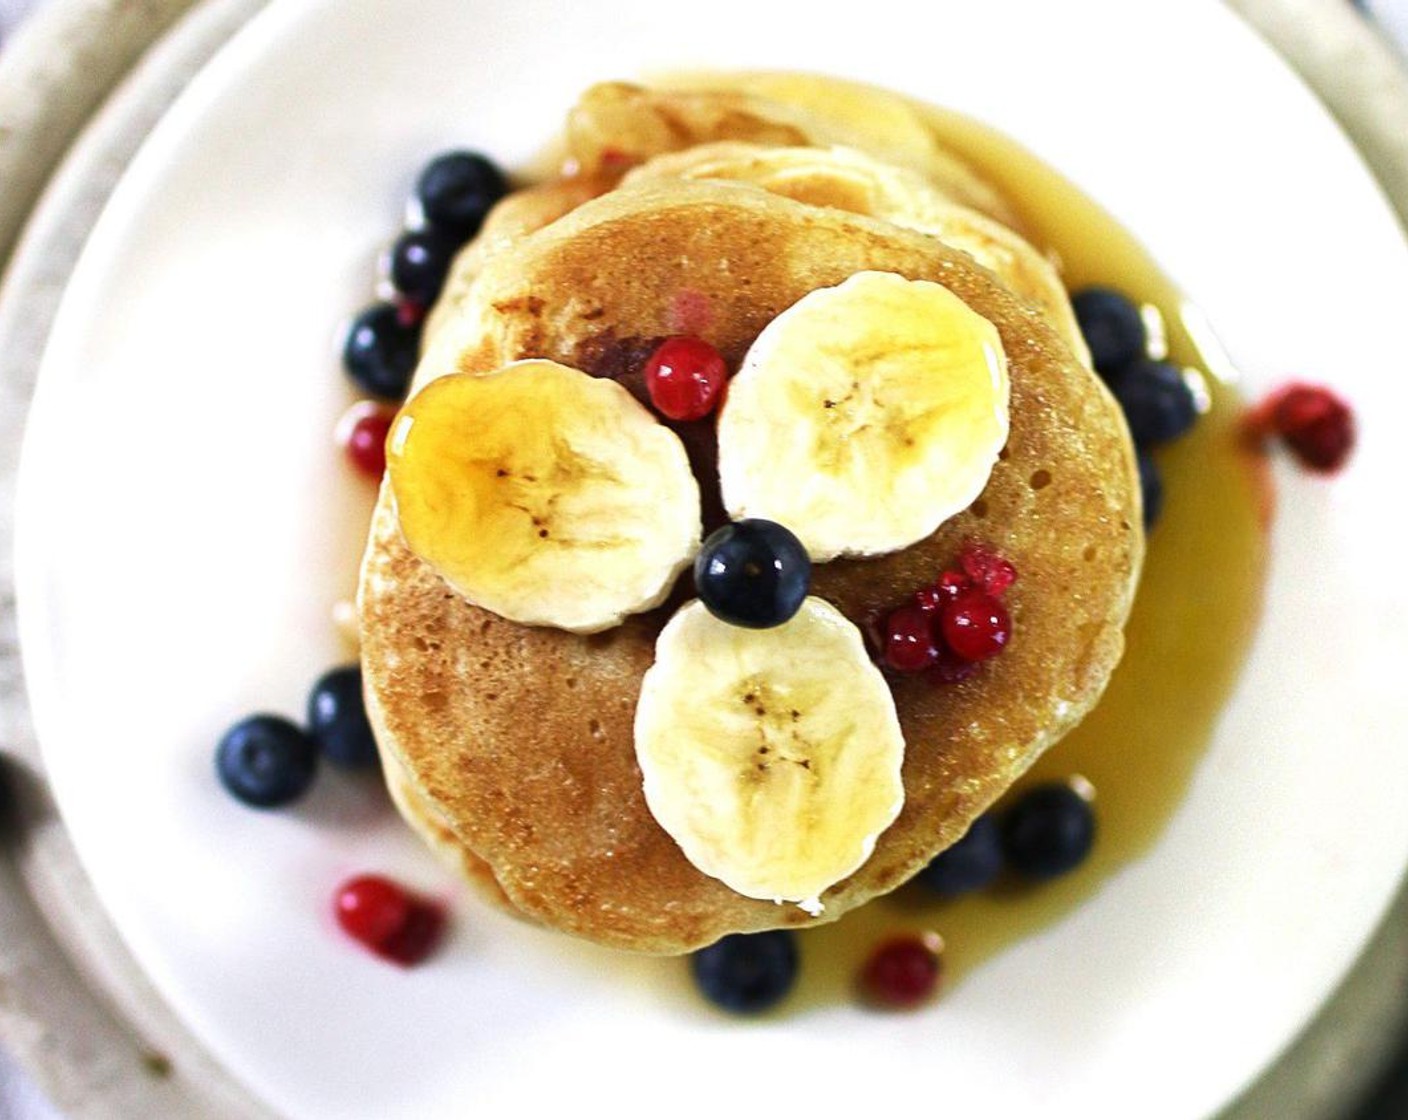 Vegan Pancakes With Banana and Blueberries